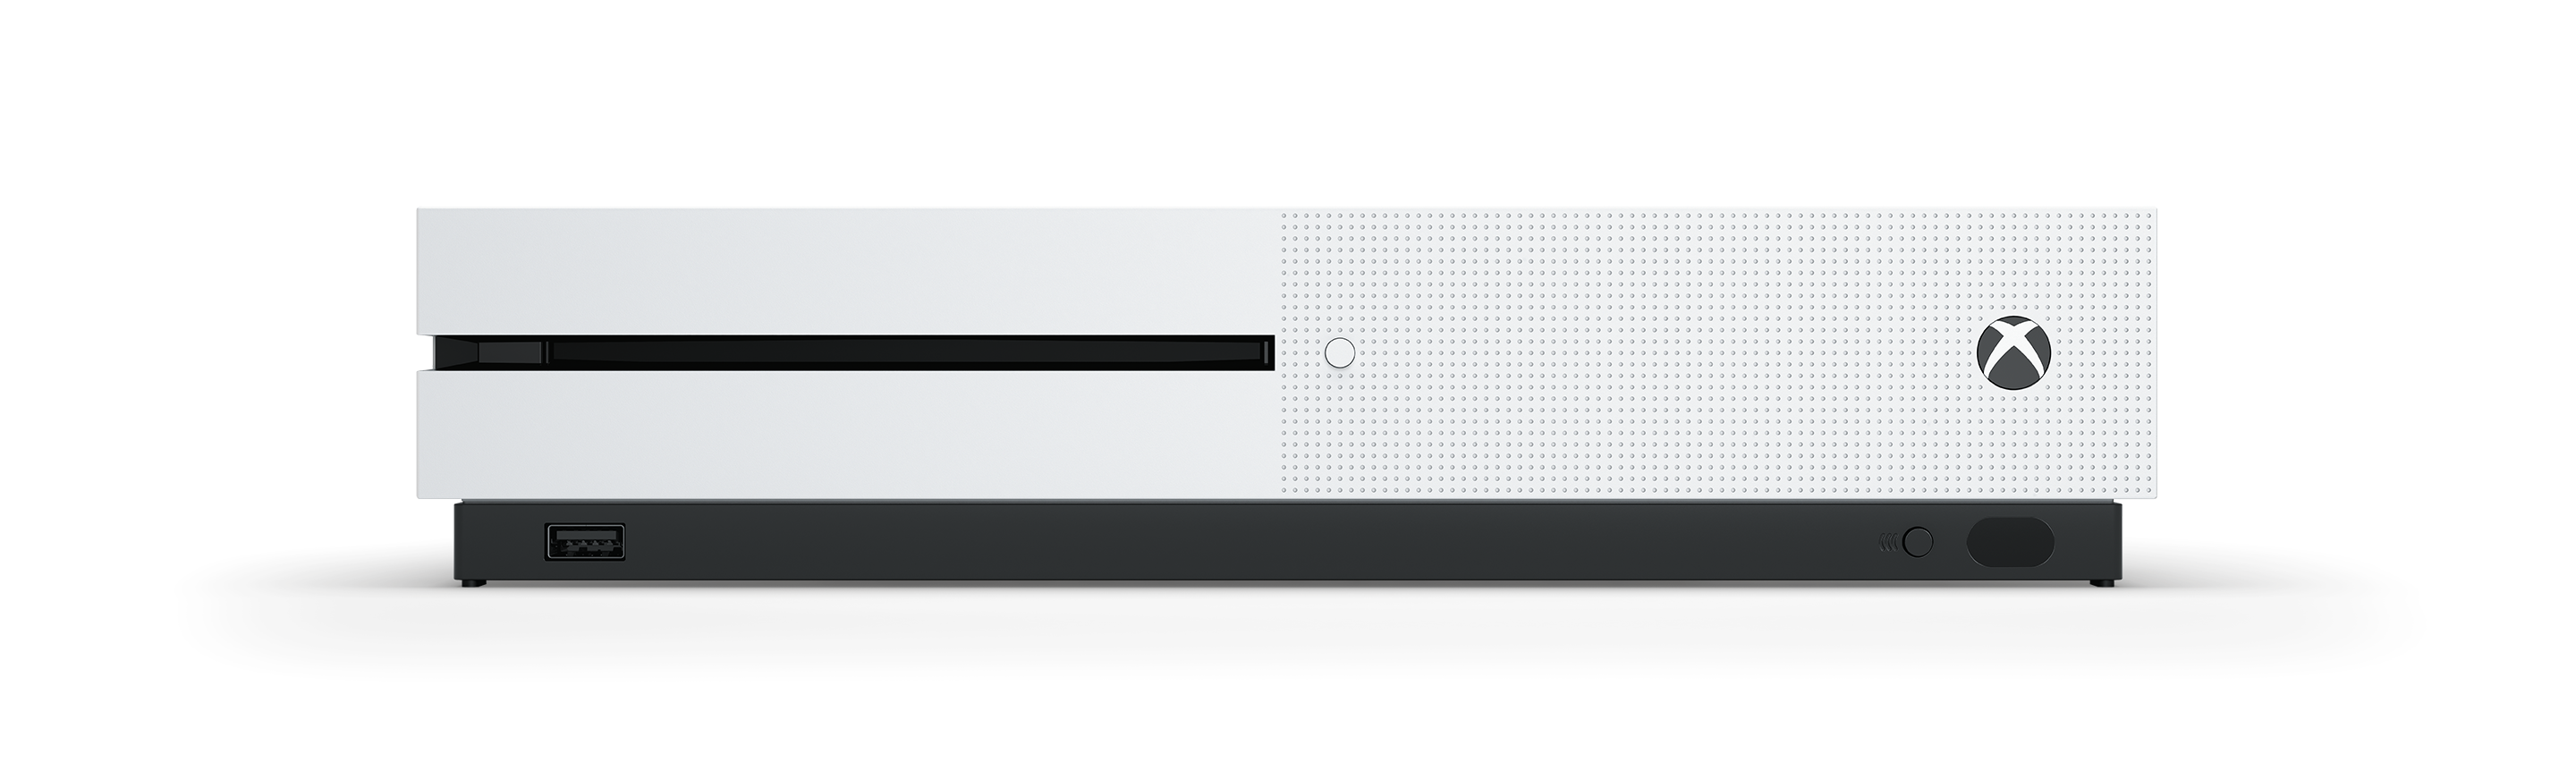 Xbox One Slim - Trailer E3 2016 